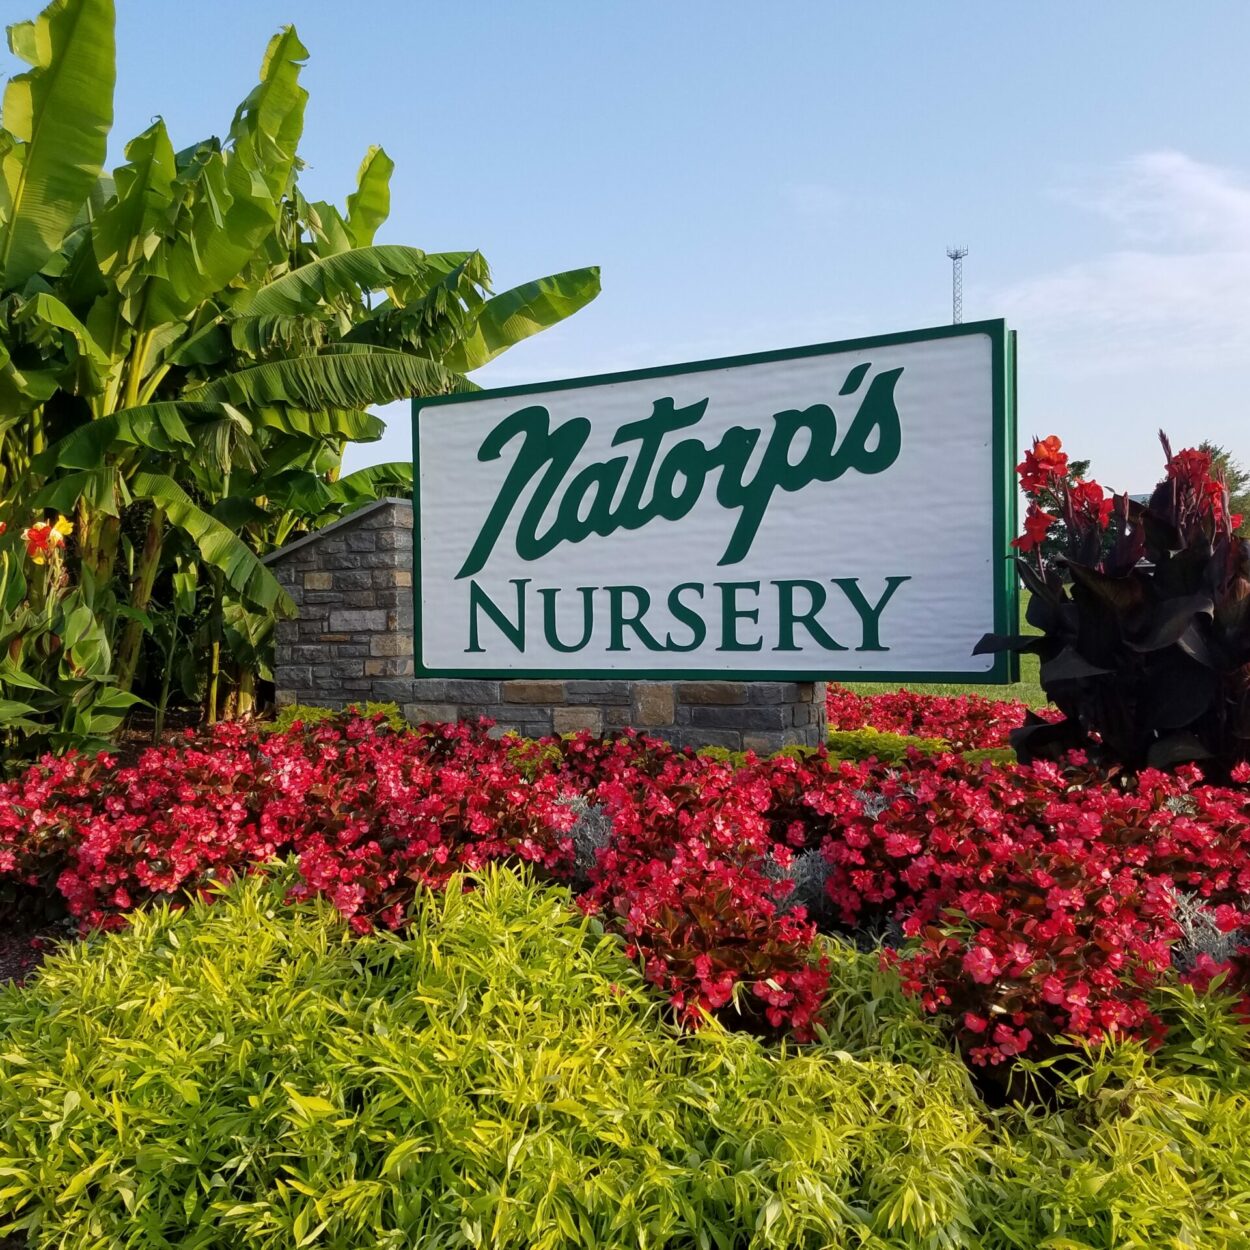 Natorp Nursery